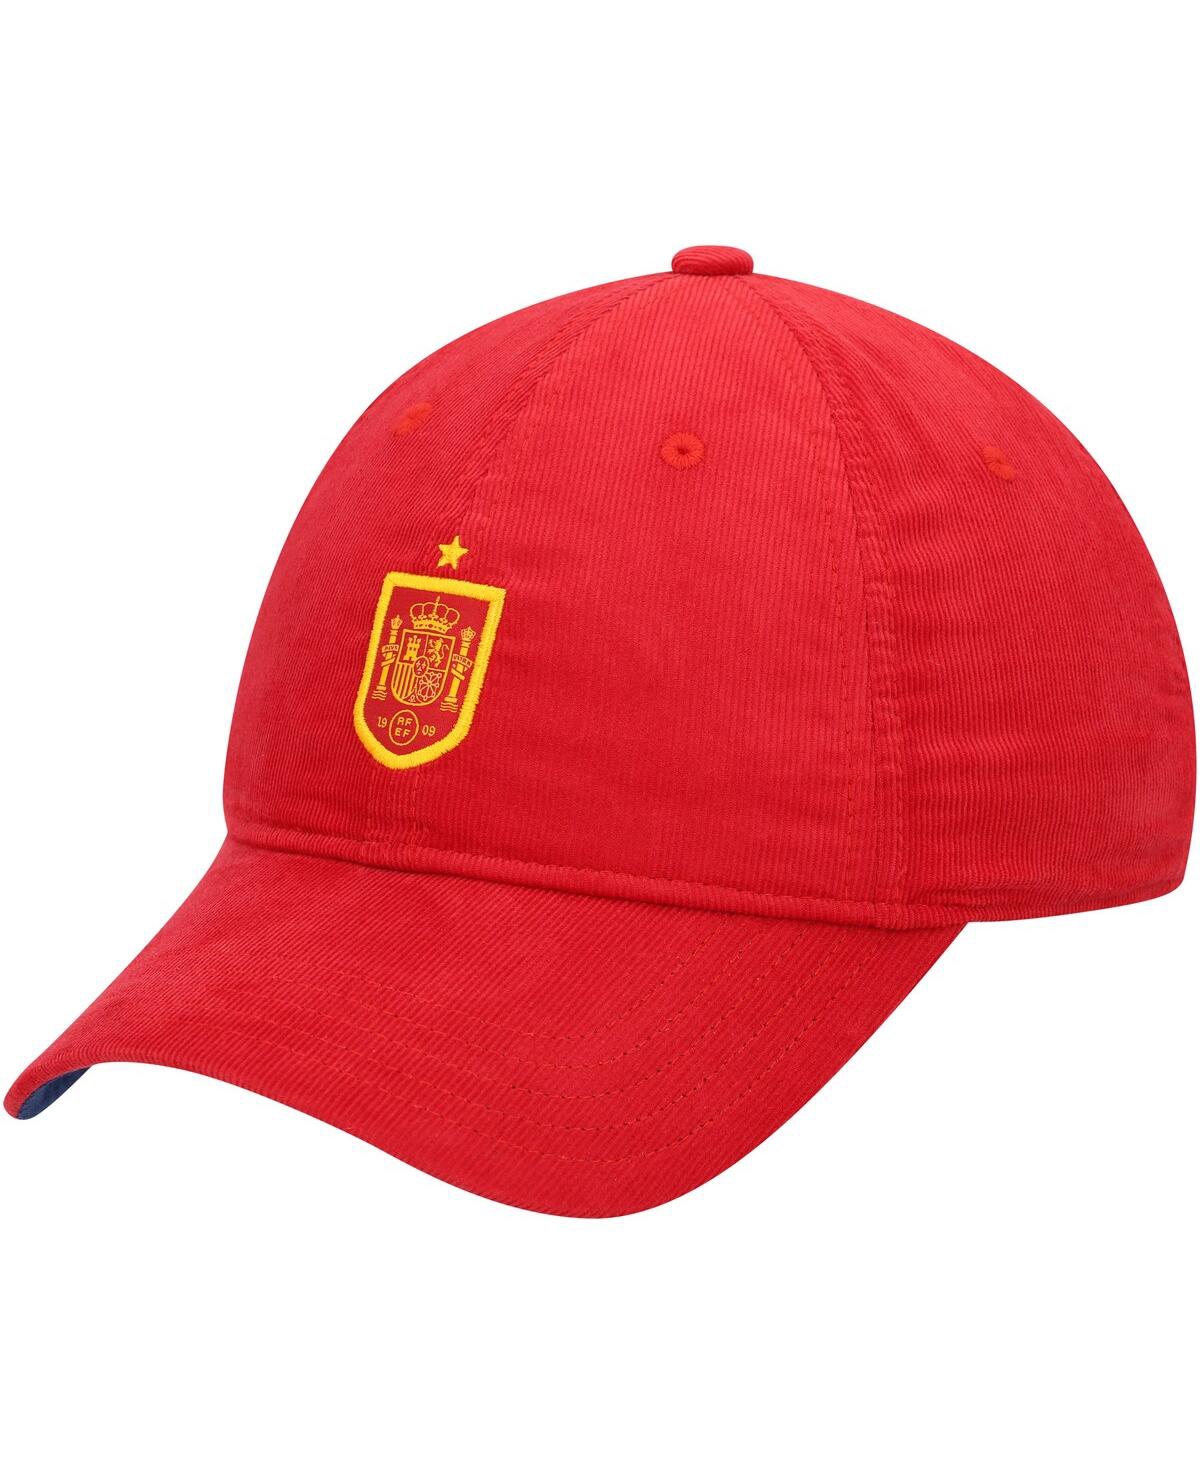 Shop Adidas Originals Men's Adidas Red Spain National Team Winter Adjustable Hat